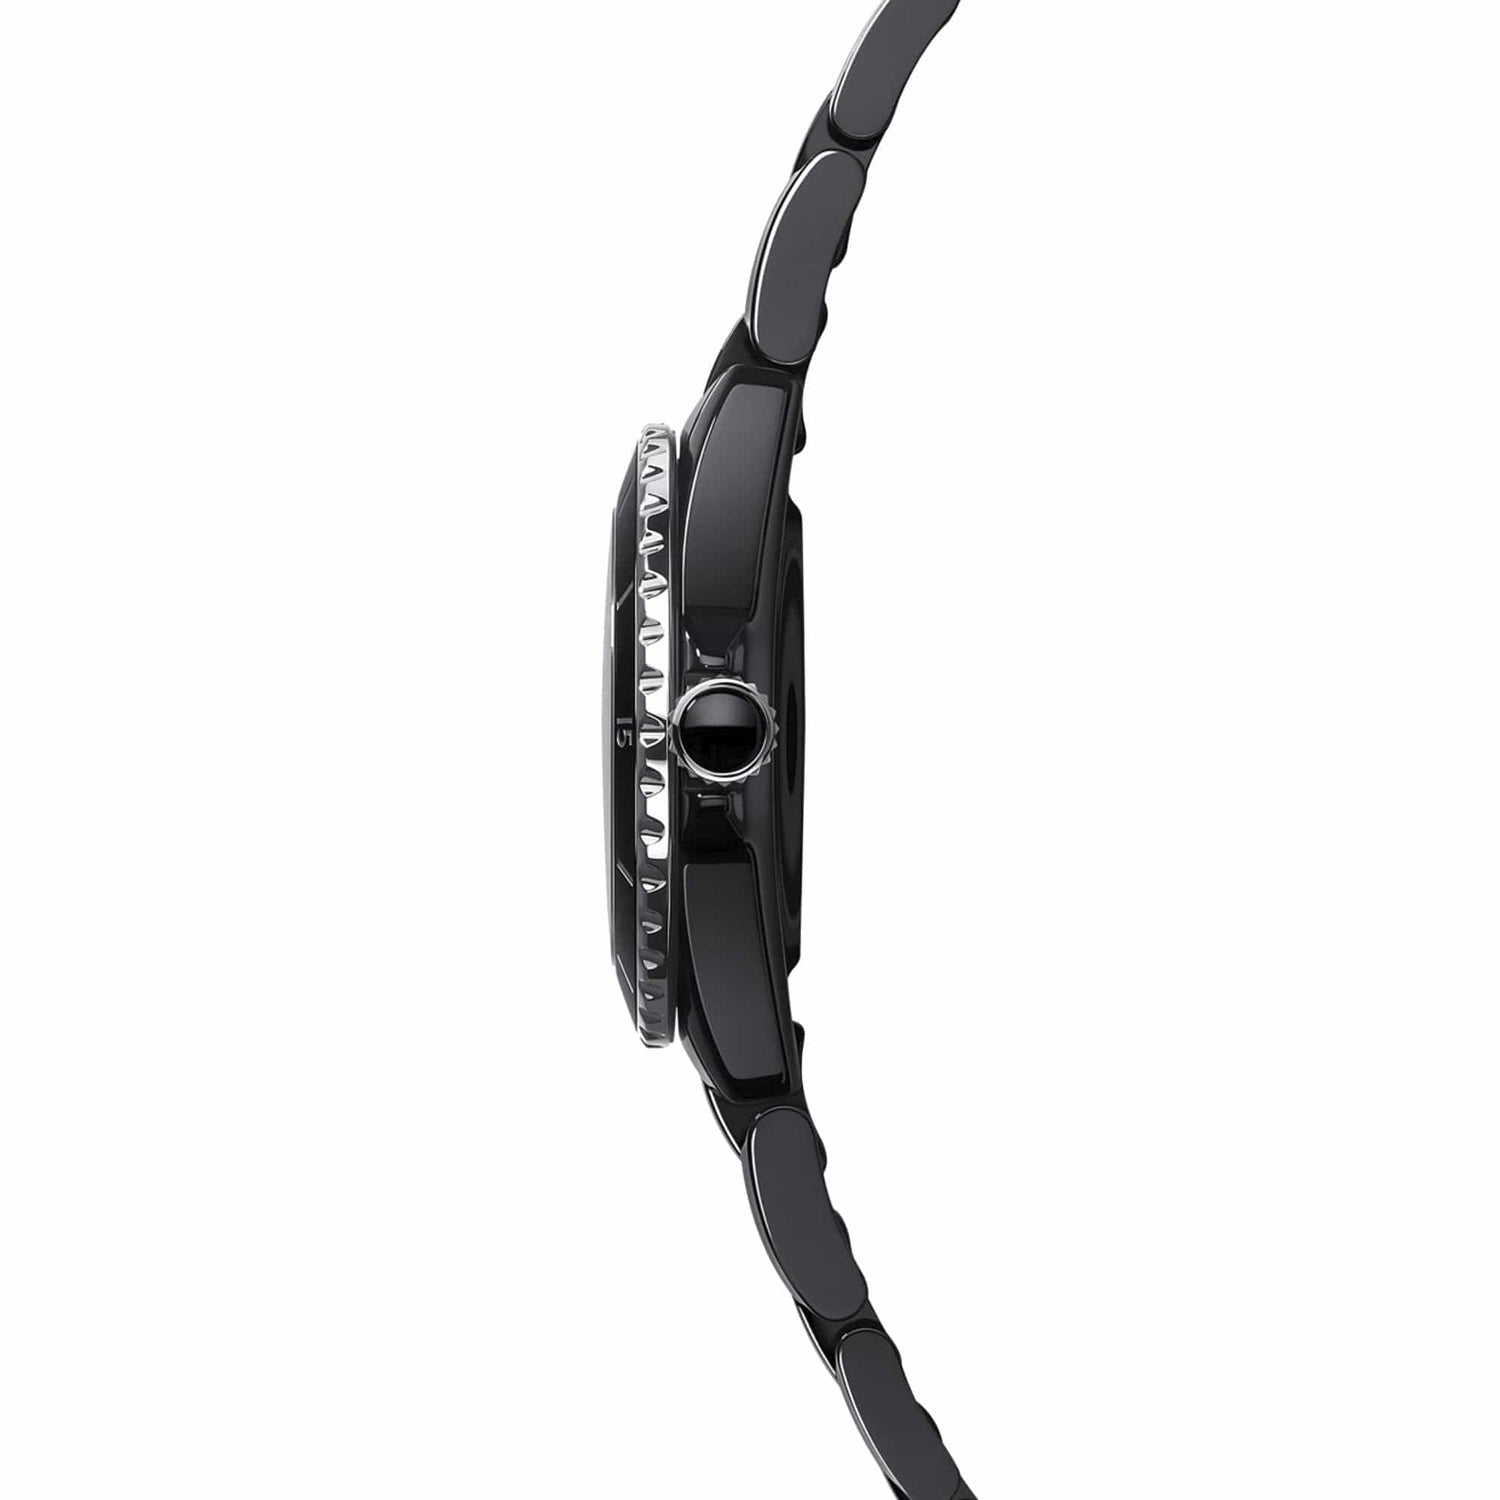 Chanel J12 Automatic Diamond Black Dial Ladies Watch H5702